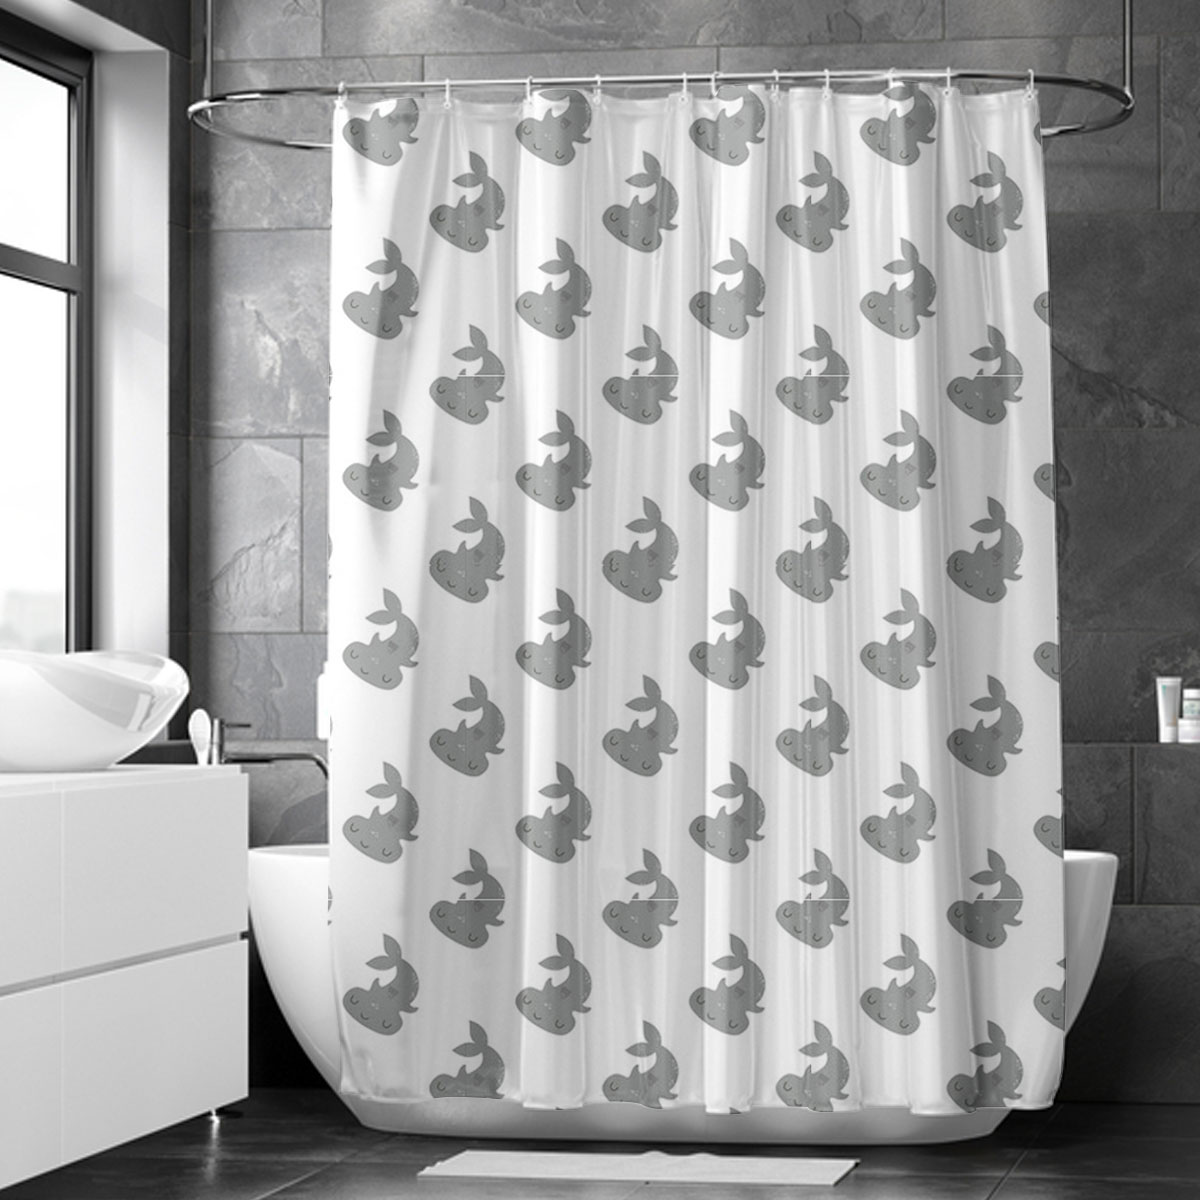 Lovely Little Hammerhead Shower Curtain